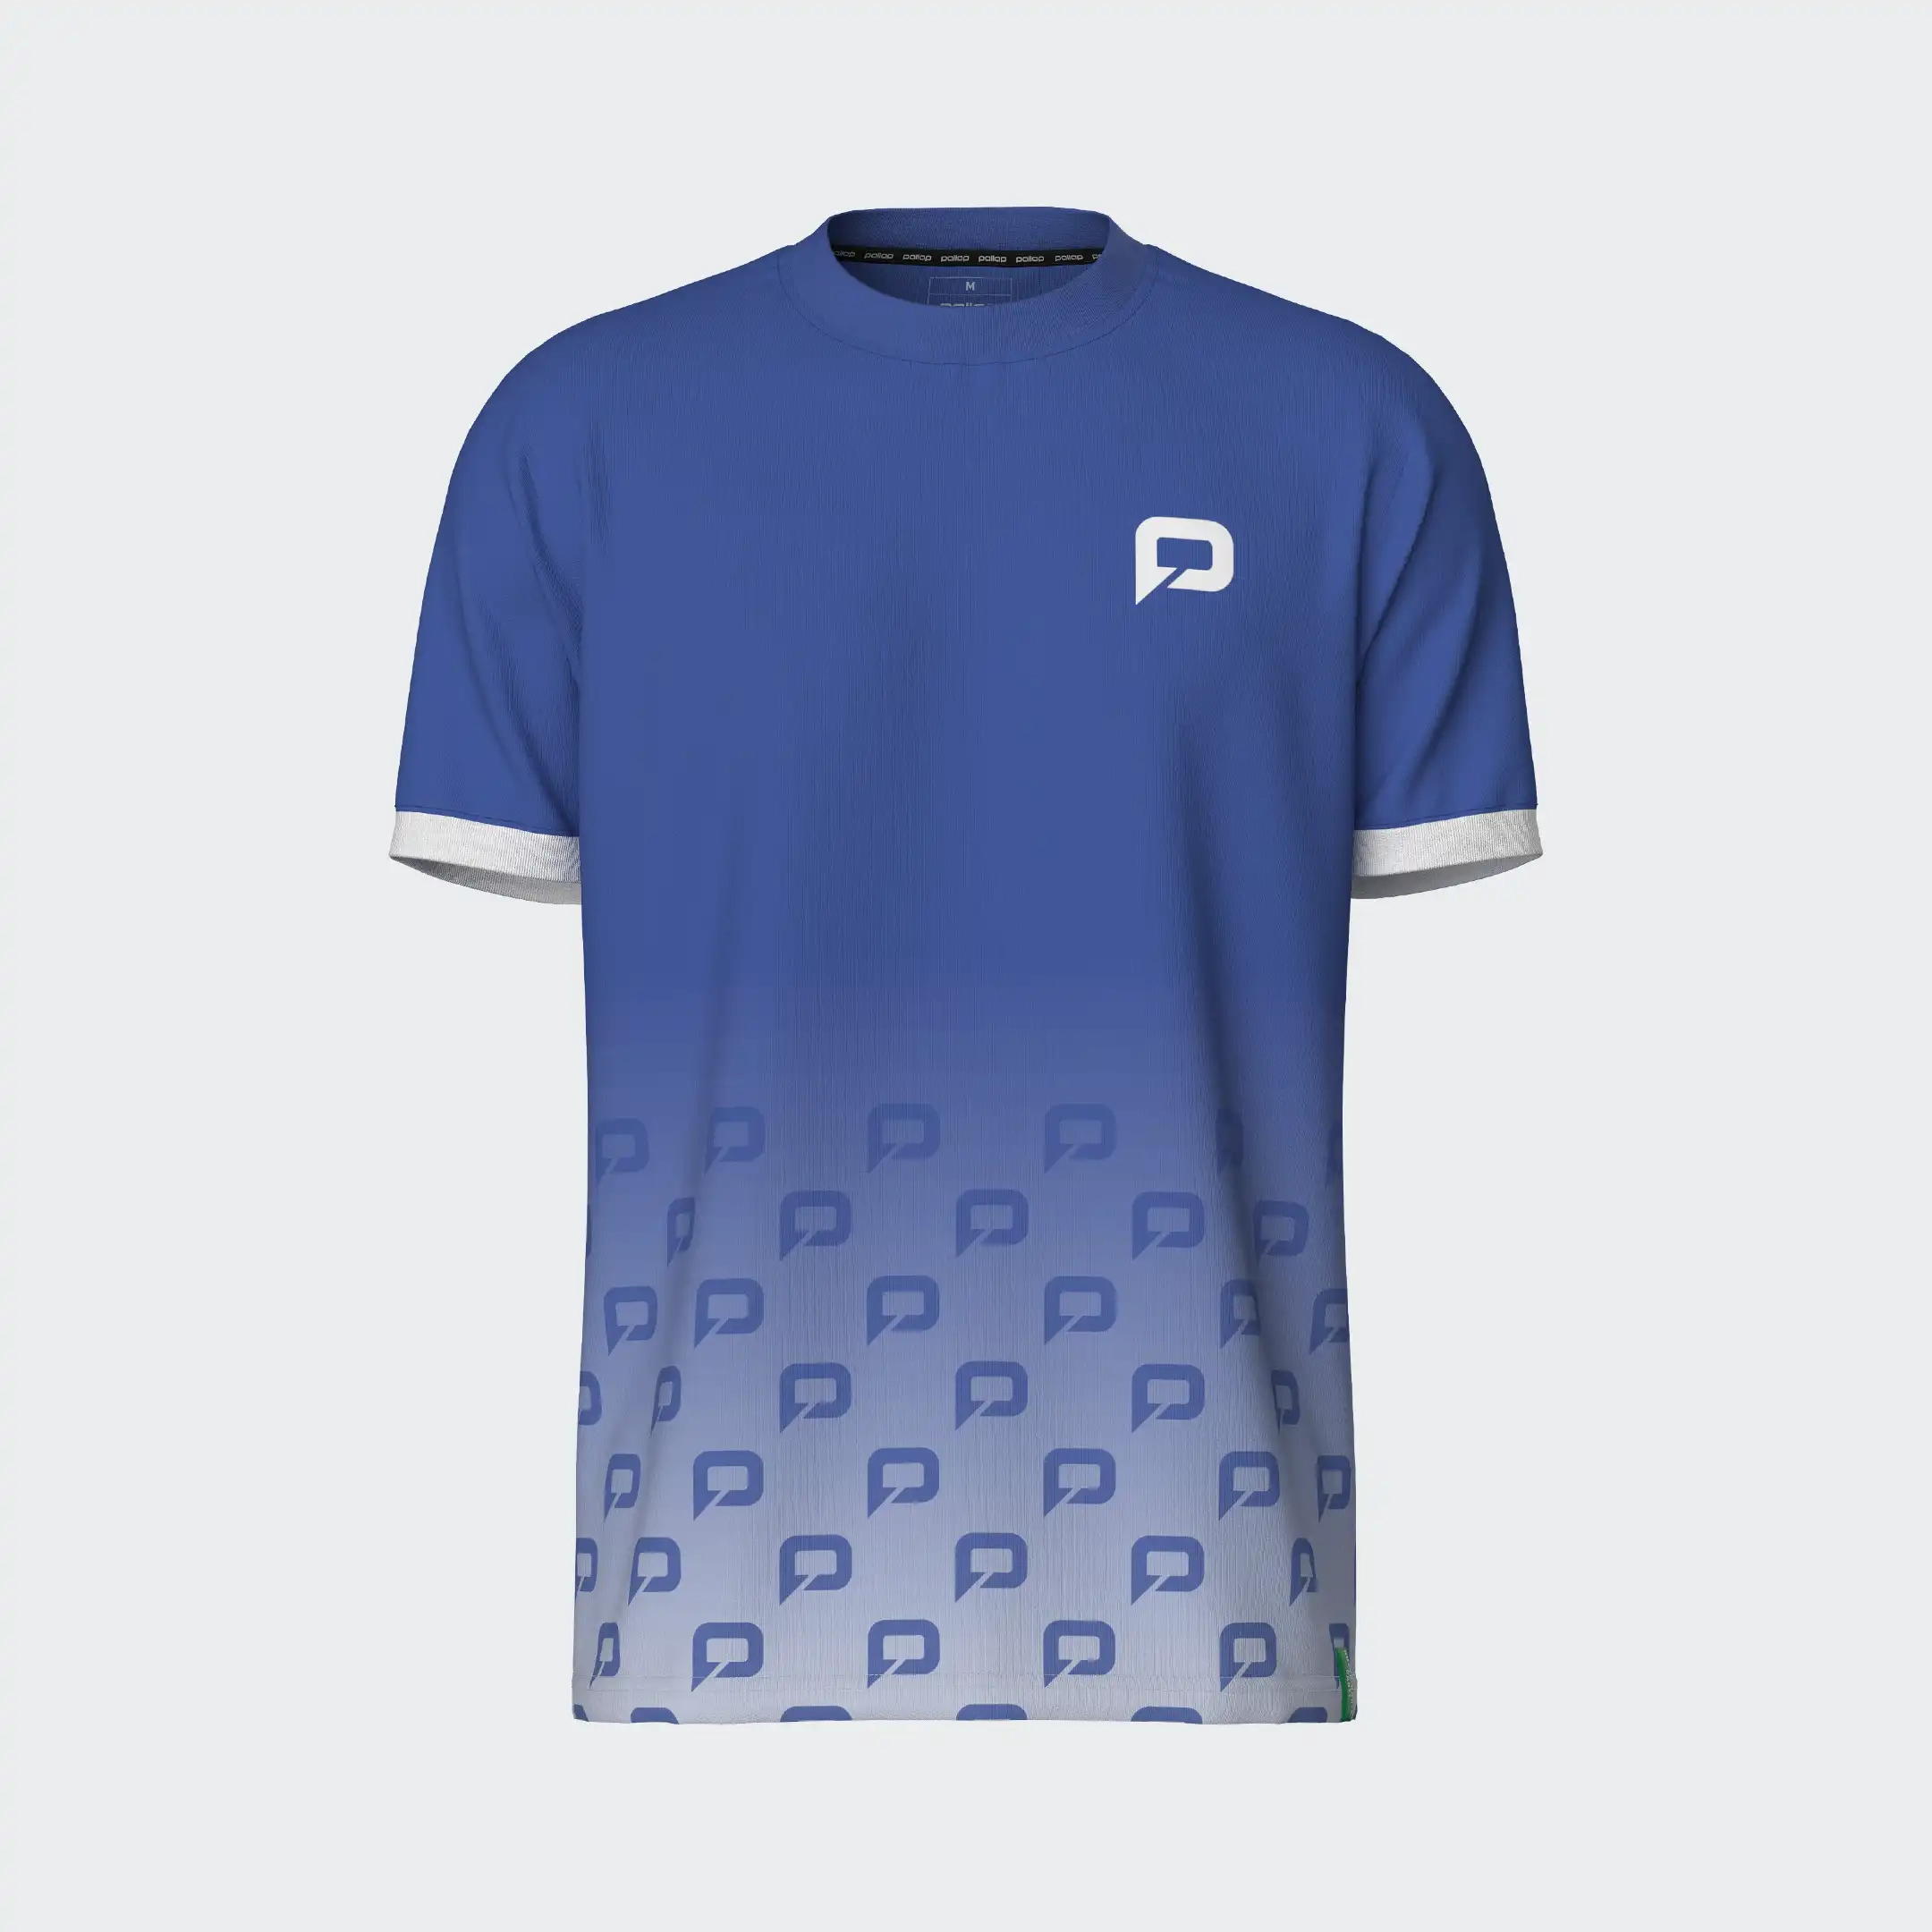 Pallap Technical pro Shirt amparo blue/white